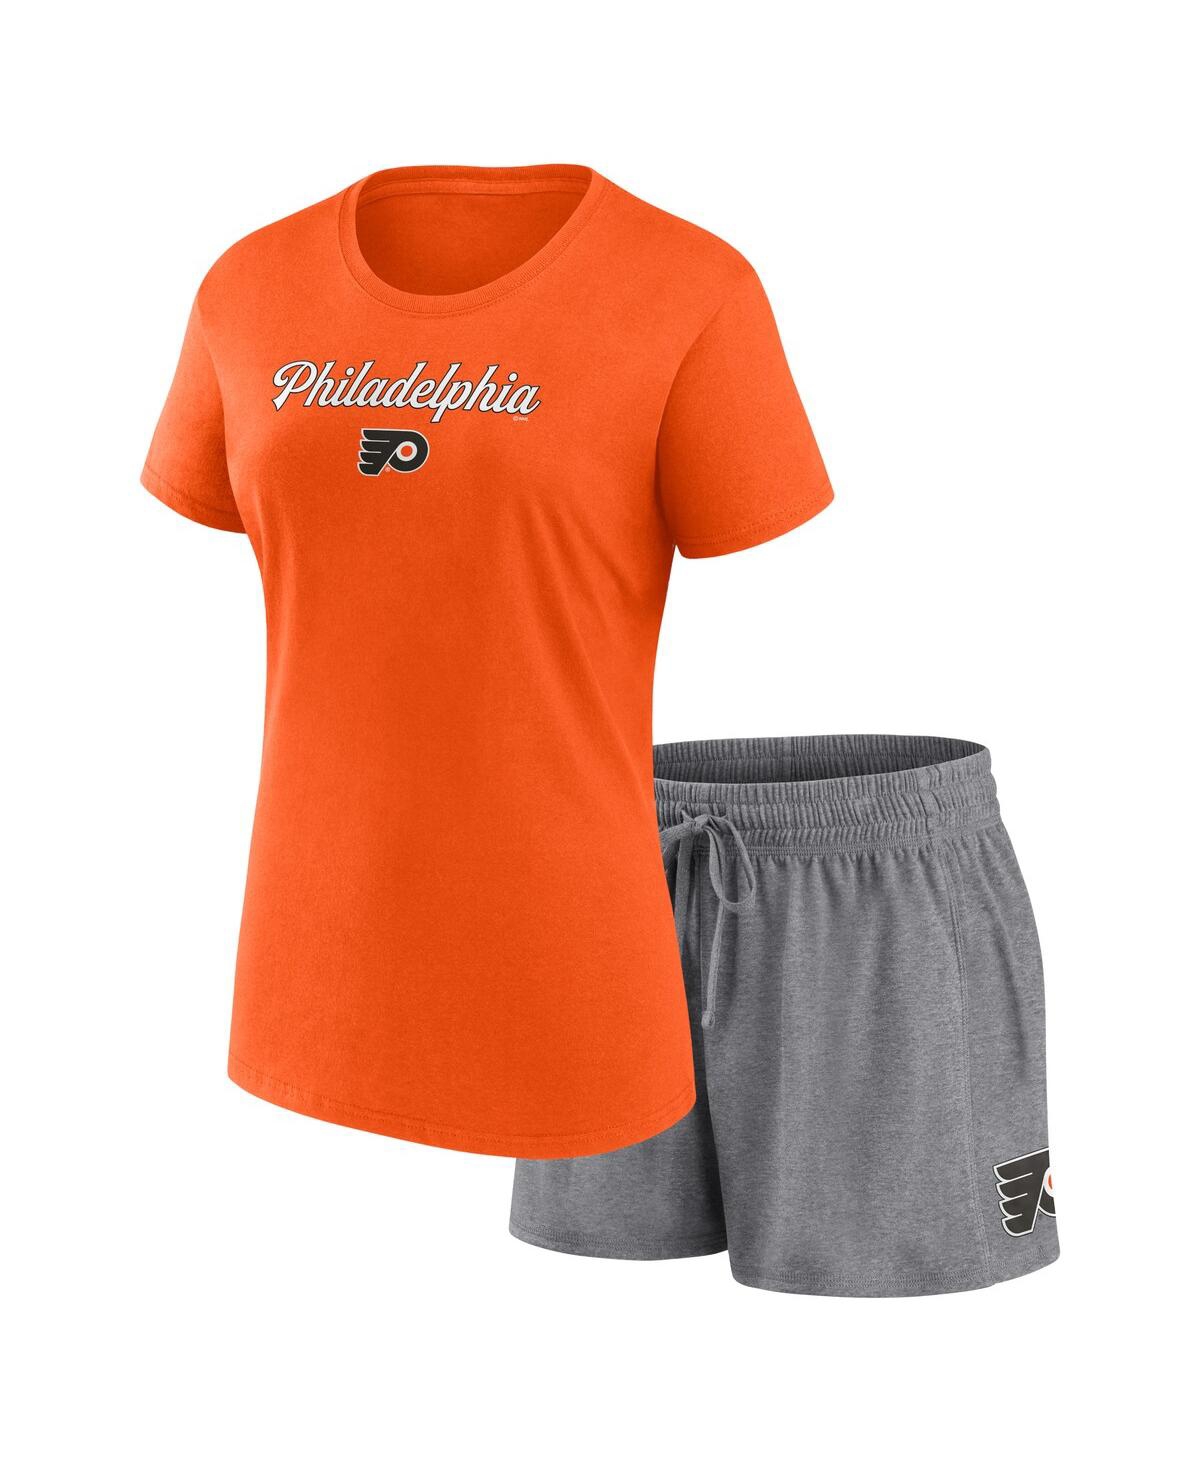 Women's Fanatics Orange, Heather Gray Philadelphia Flyers Script T-shirt and Shorts Set - Orange, Heather Gray